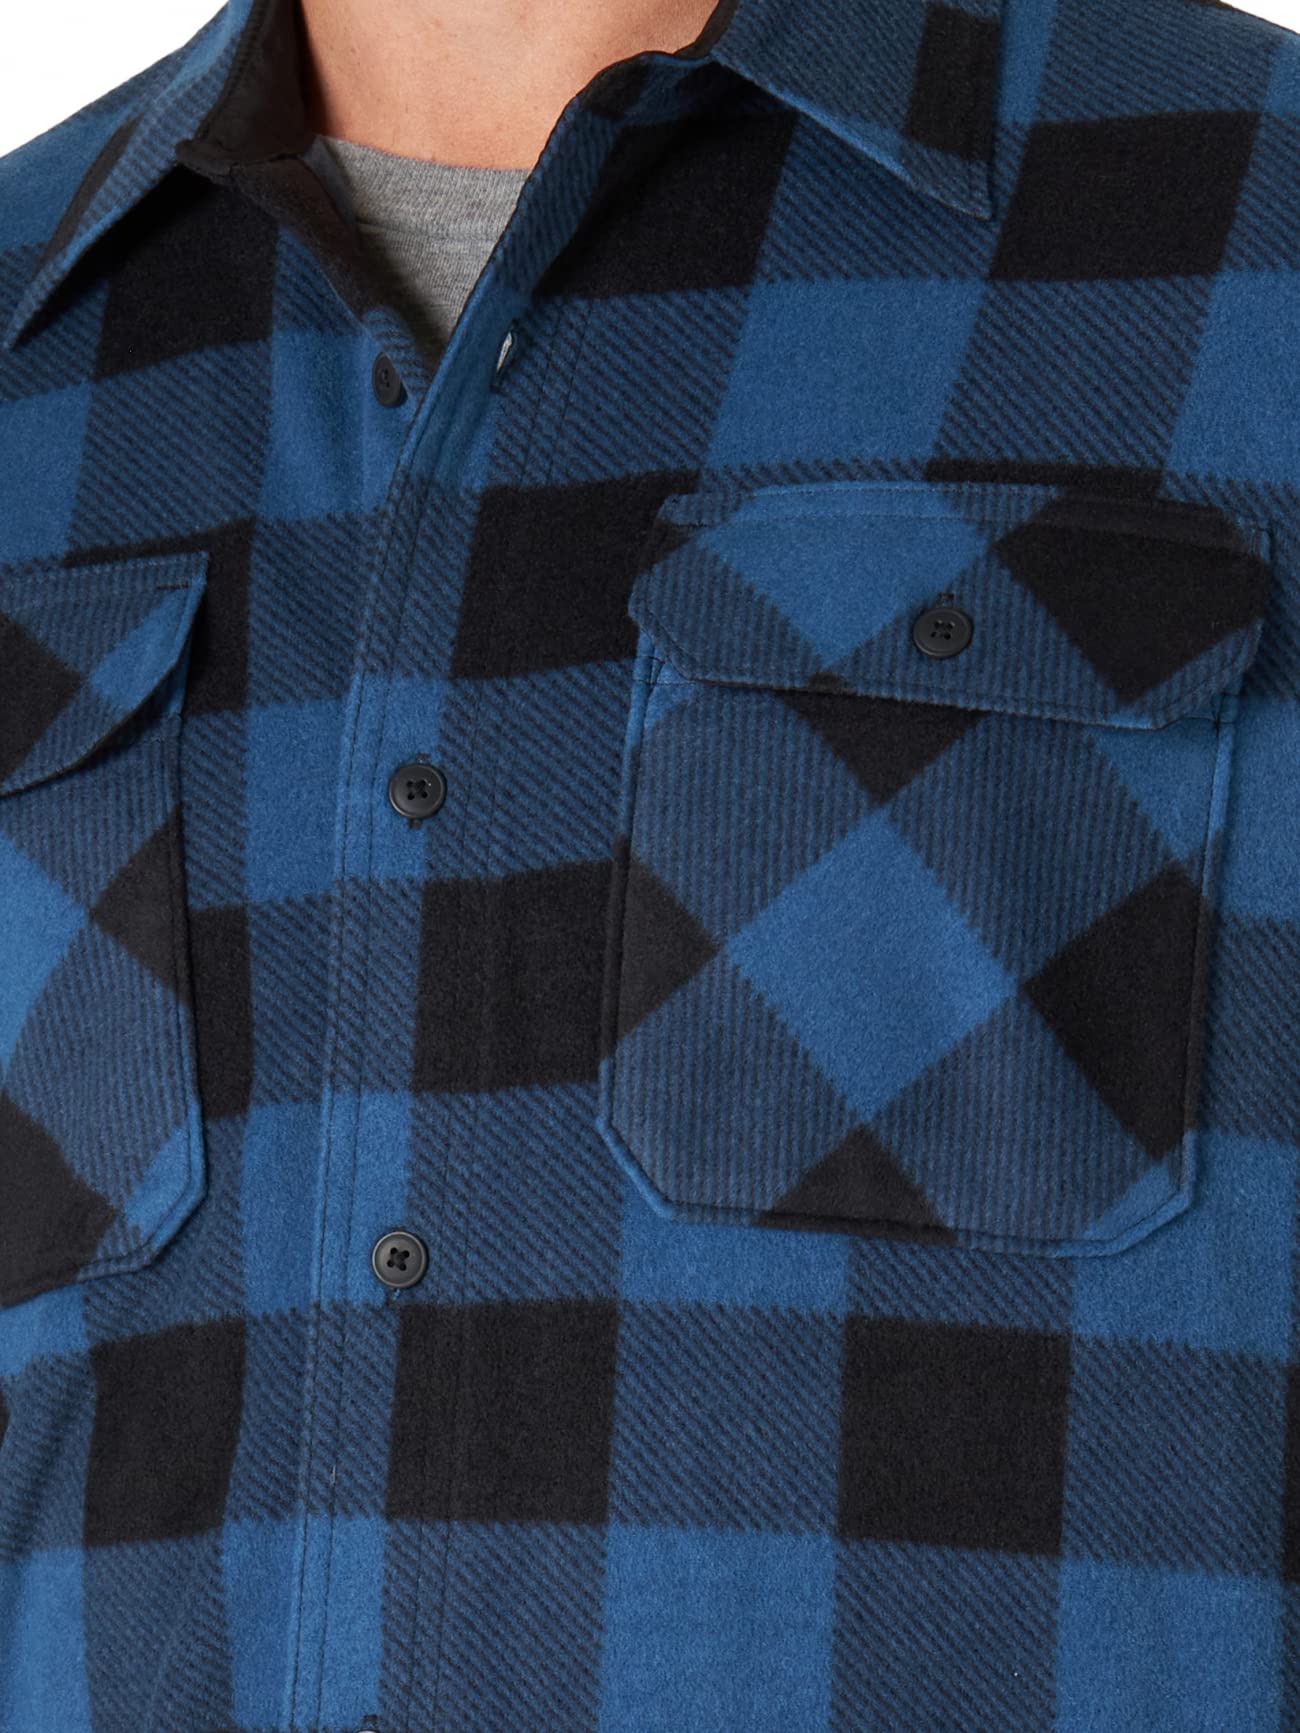 Wrangler Authentics Men's Long Sleeve Heavyweight Fleece Shirt, Blue Buffalo Plaid, 2X Tall